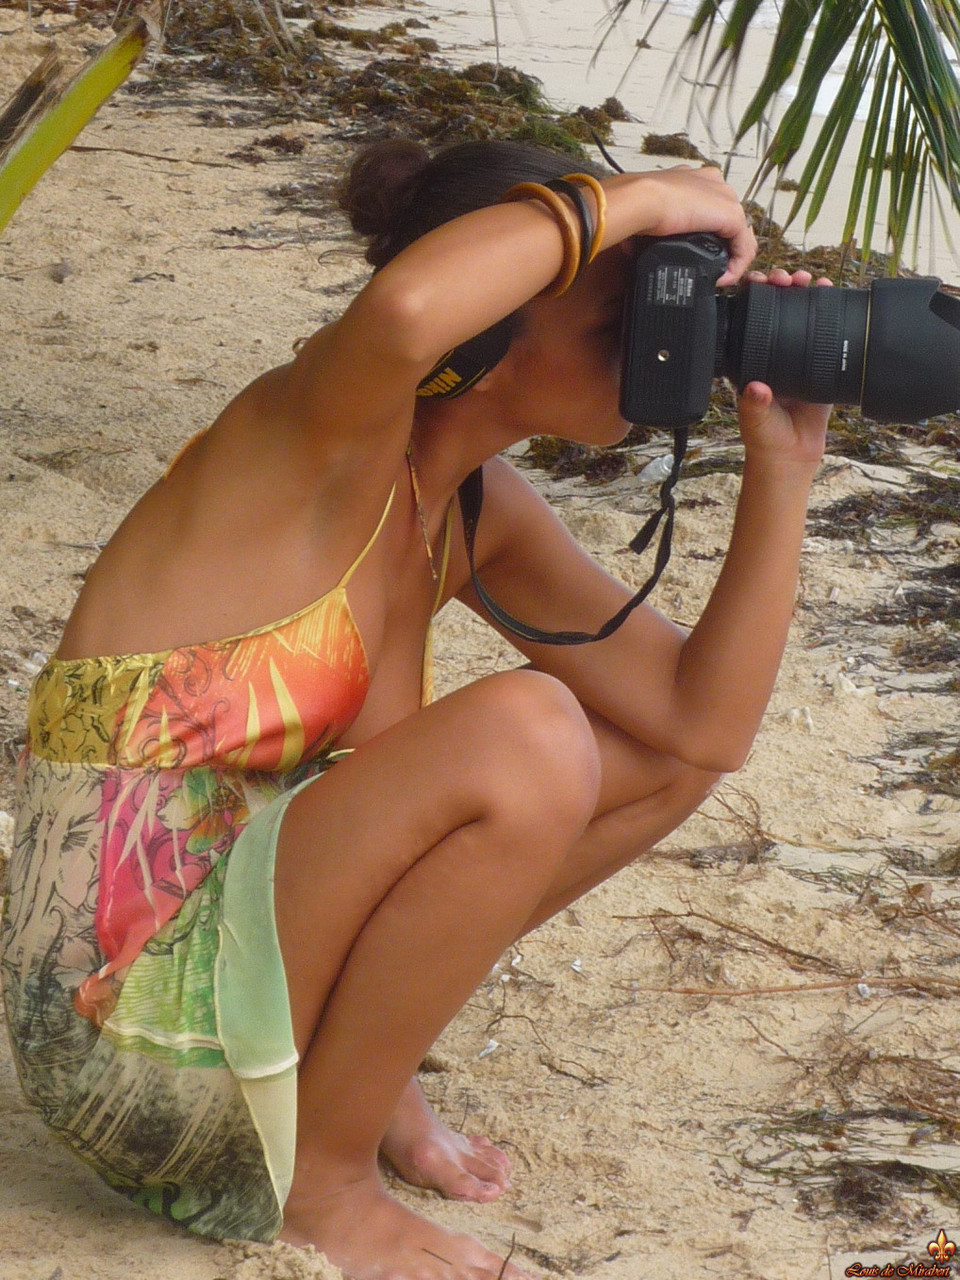 Beautiful girls work free of their swimwear while modeling on a tropical beach photo porno #424108093